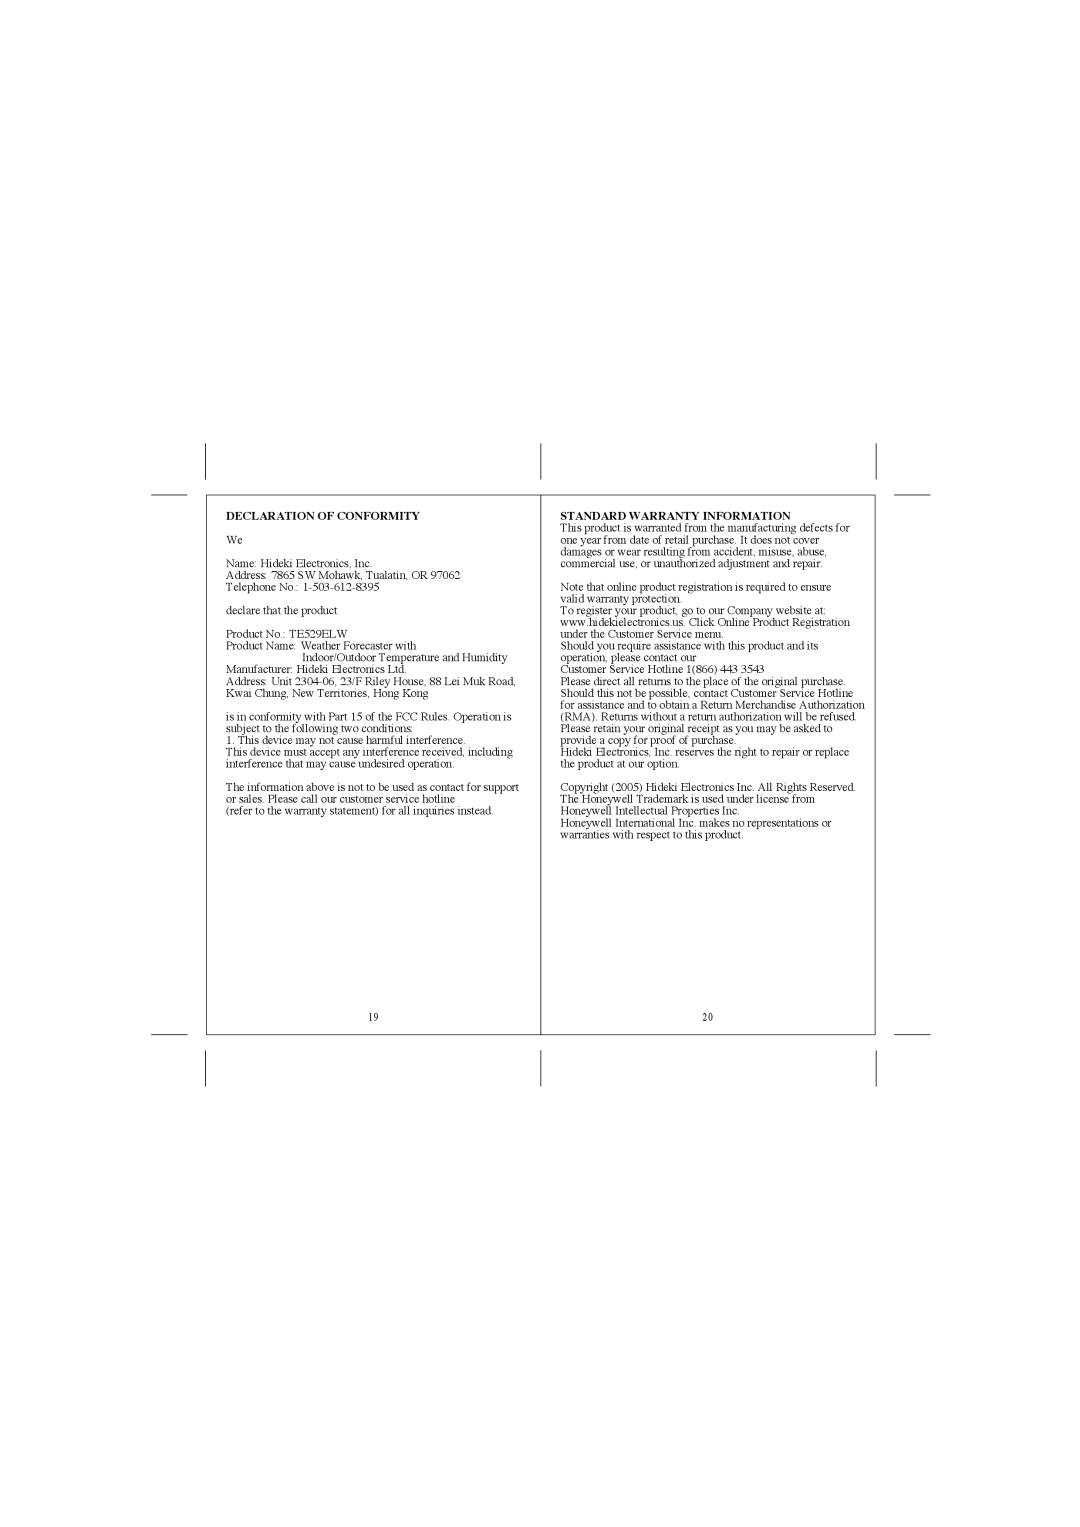 Honeywell TE529ELW, TS33 user manual Declaration Of Conformity, Standard Warranty Information 